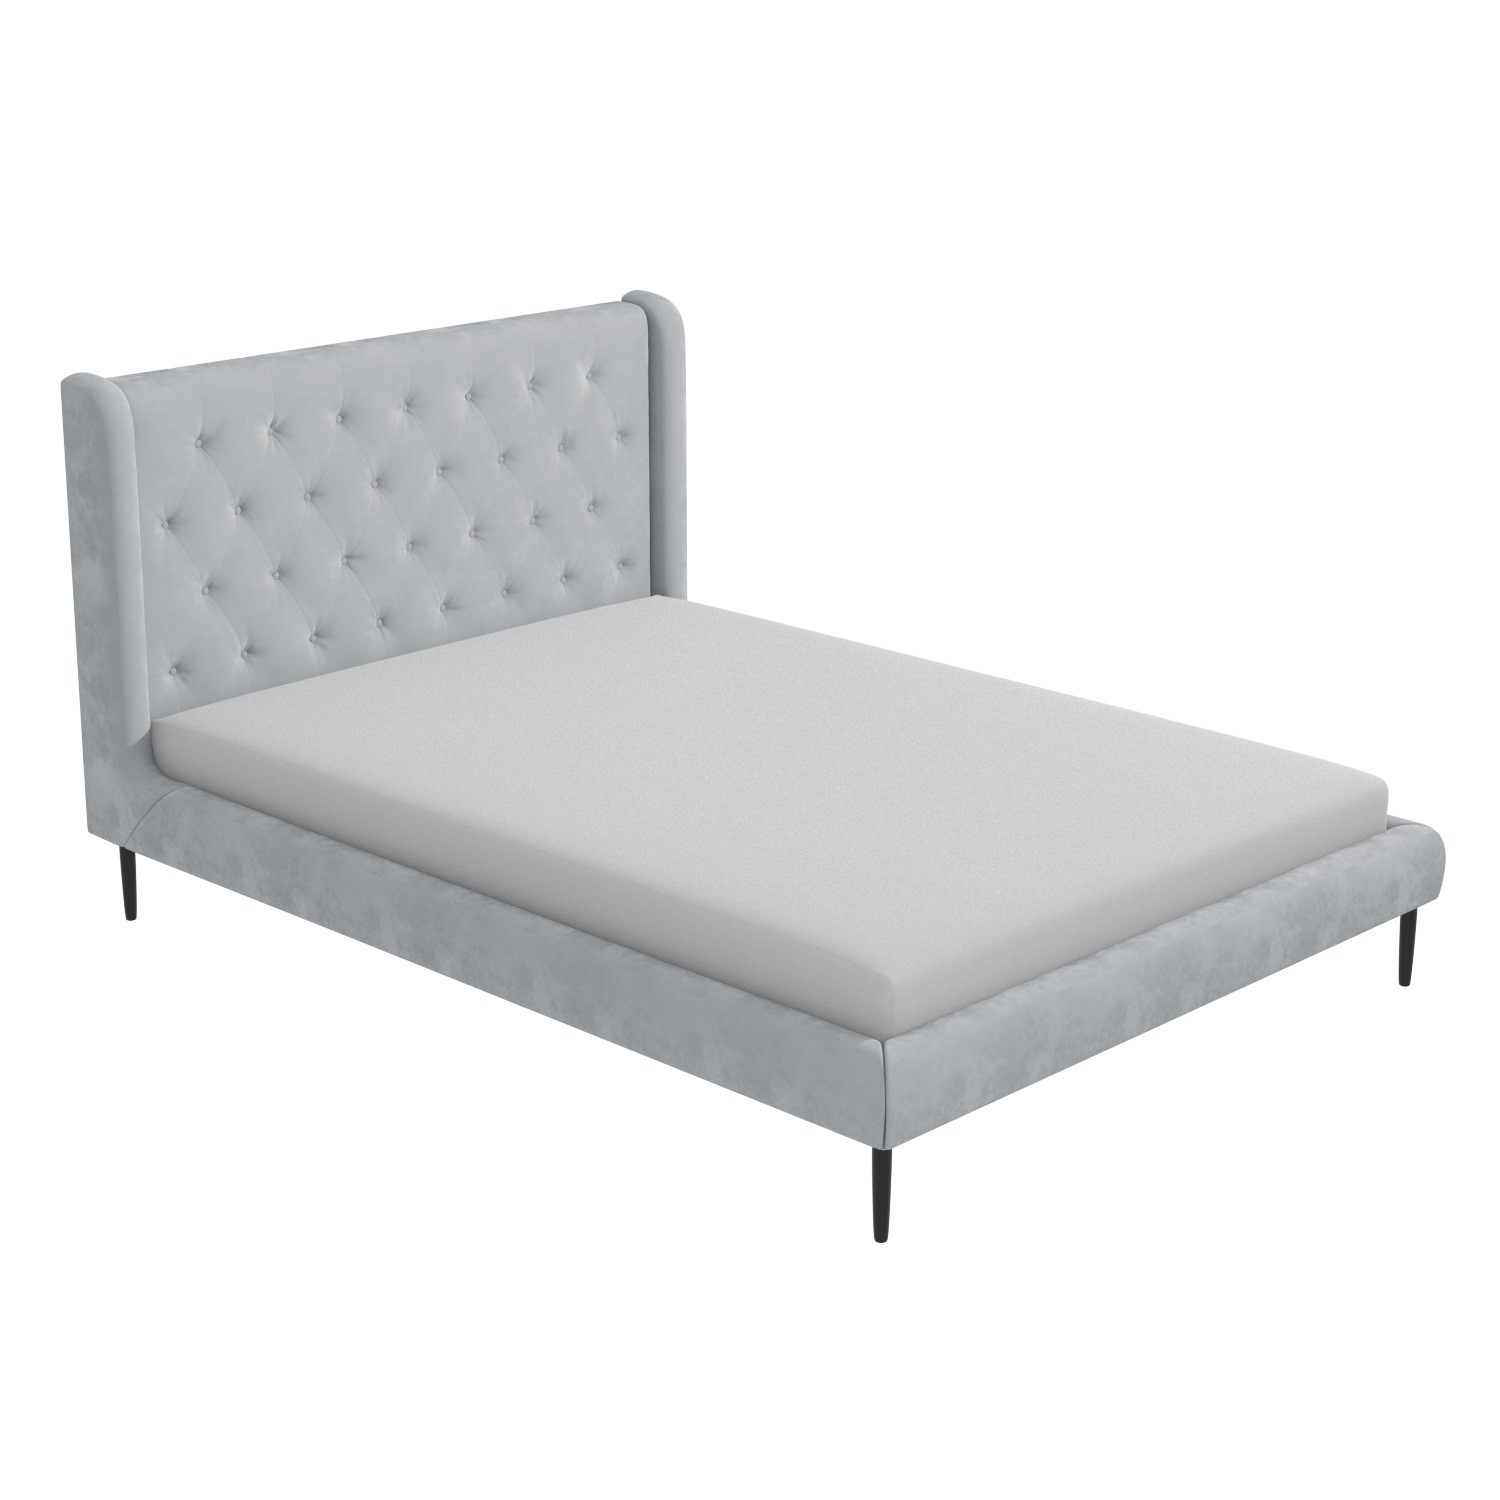 Light Grey Velvet King Size Bed Frame, King Size Bed Base With Headboard